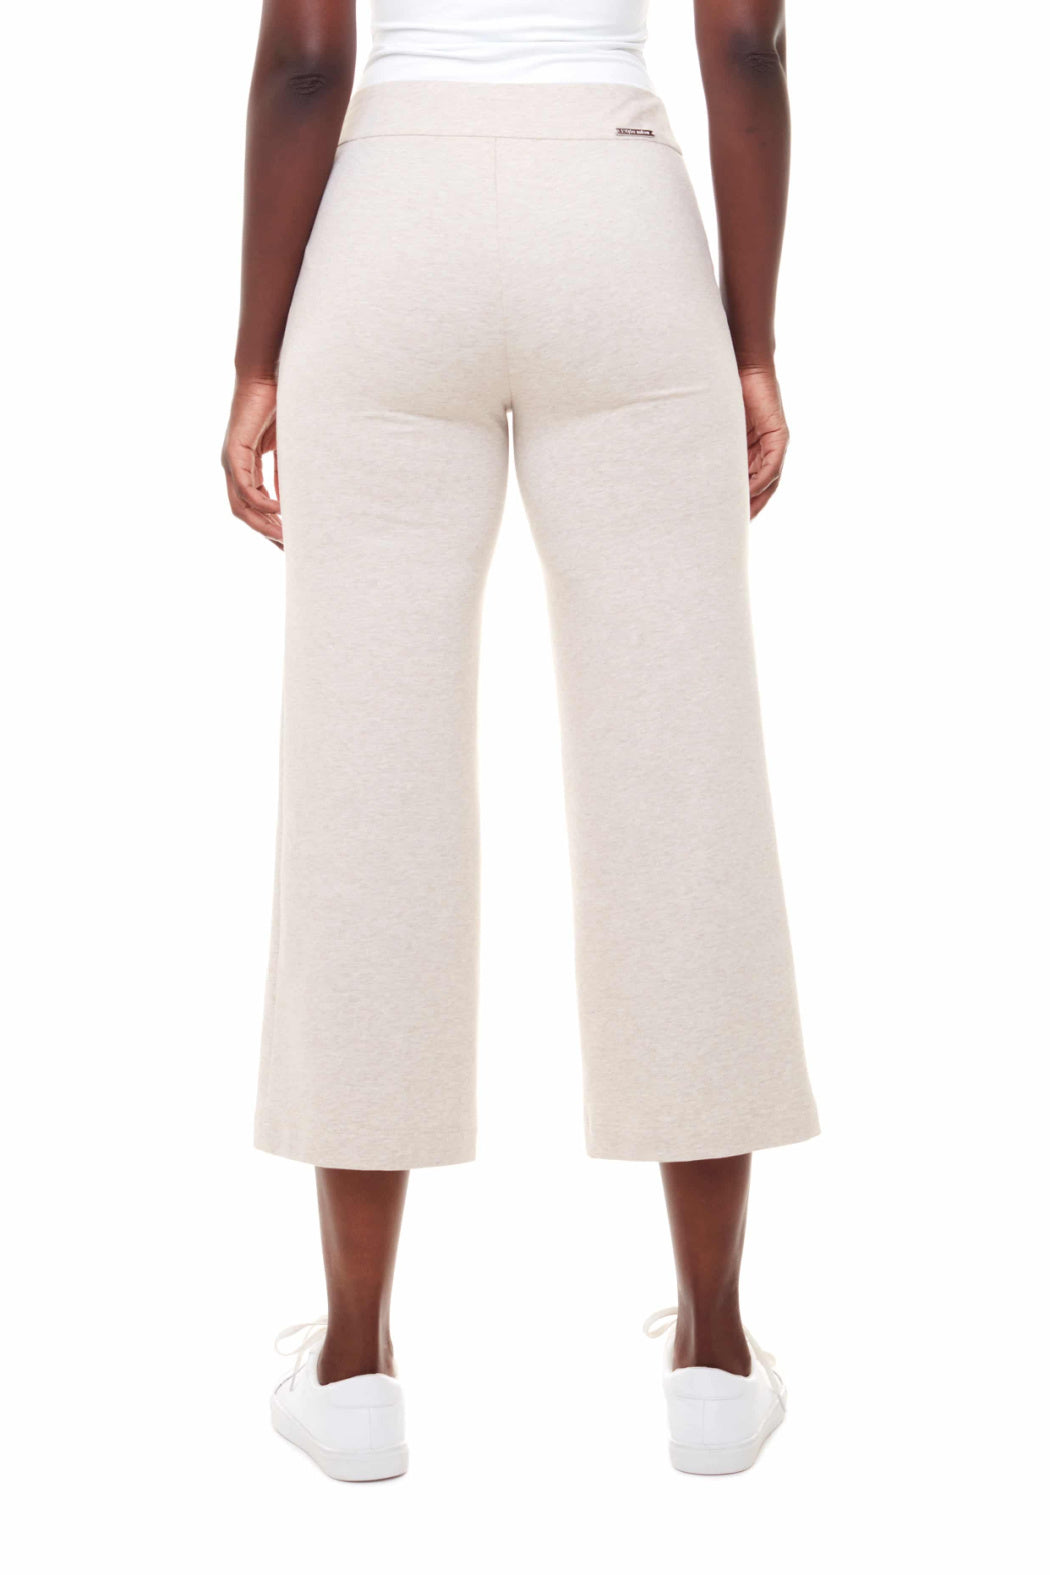 Pantalon Gaucho taille haute Zoey - Gruau | ILTM - Liquidation